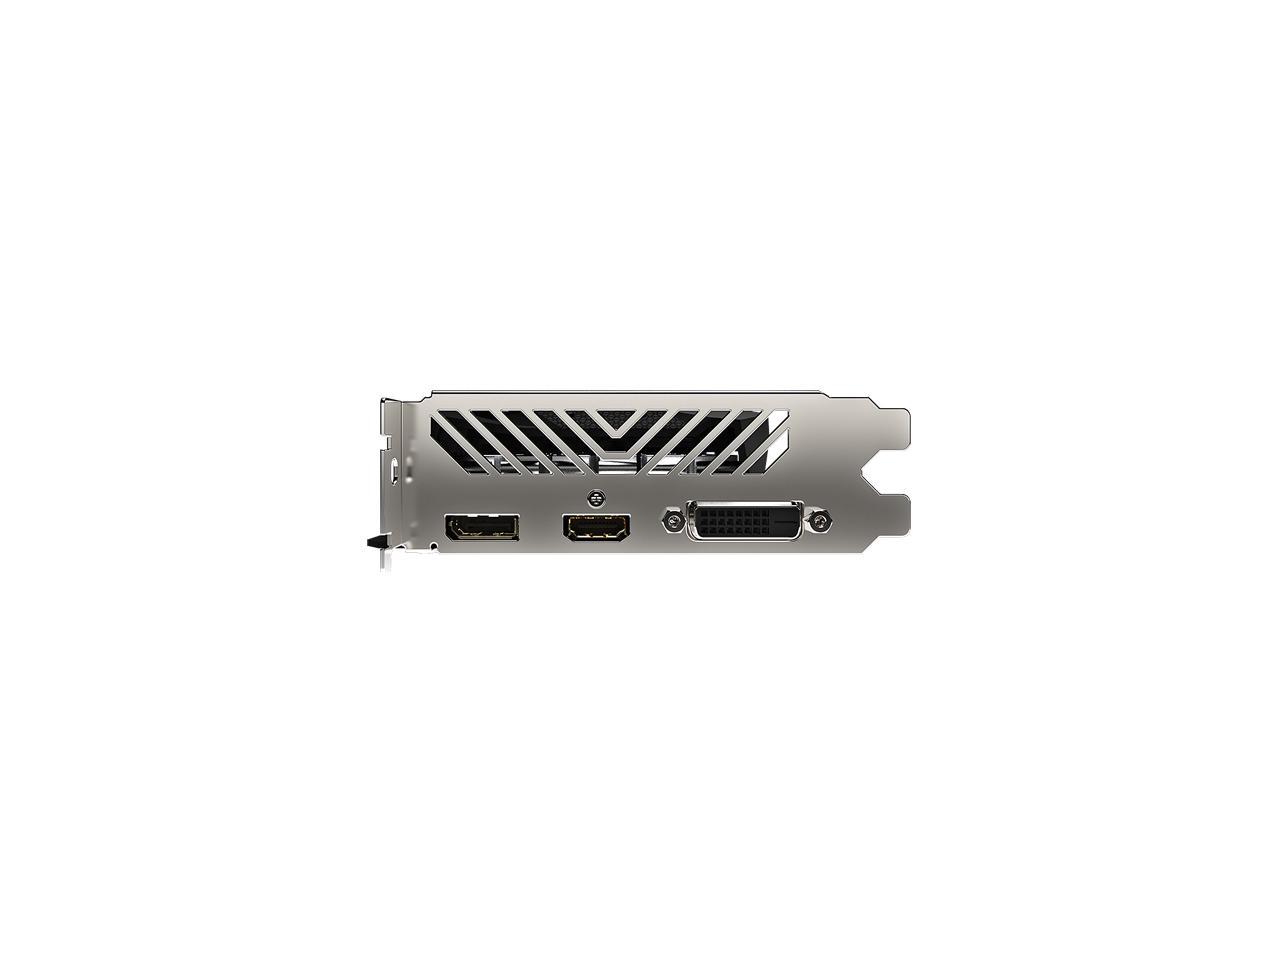 GIGABYTE GeForce GTX 1650 DirectX 12 GV-N1656WF2OC-4GD (rev. 2.0) 4GB 128-Bit GDDR6 PCI Express 3.0 x16 ATX Video Card